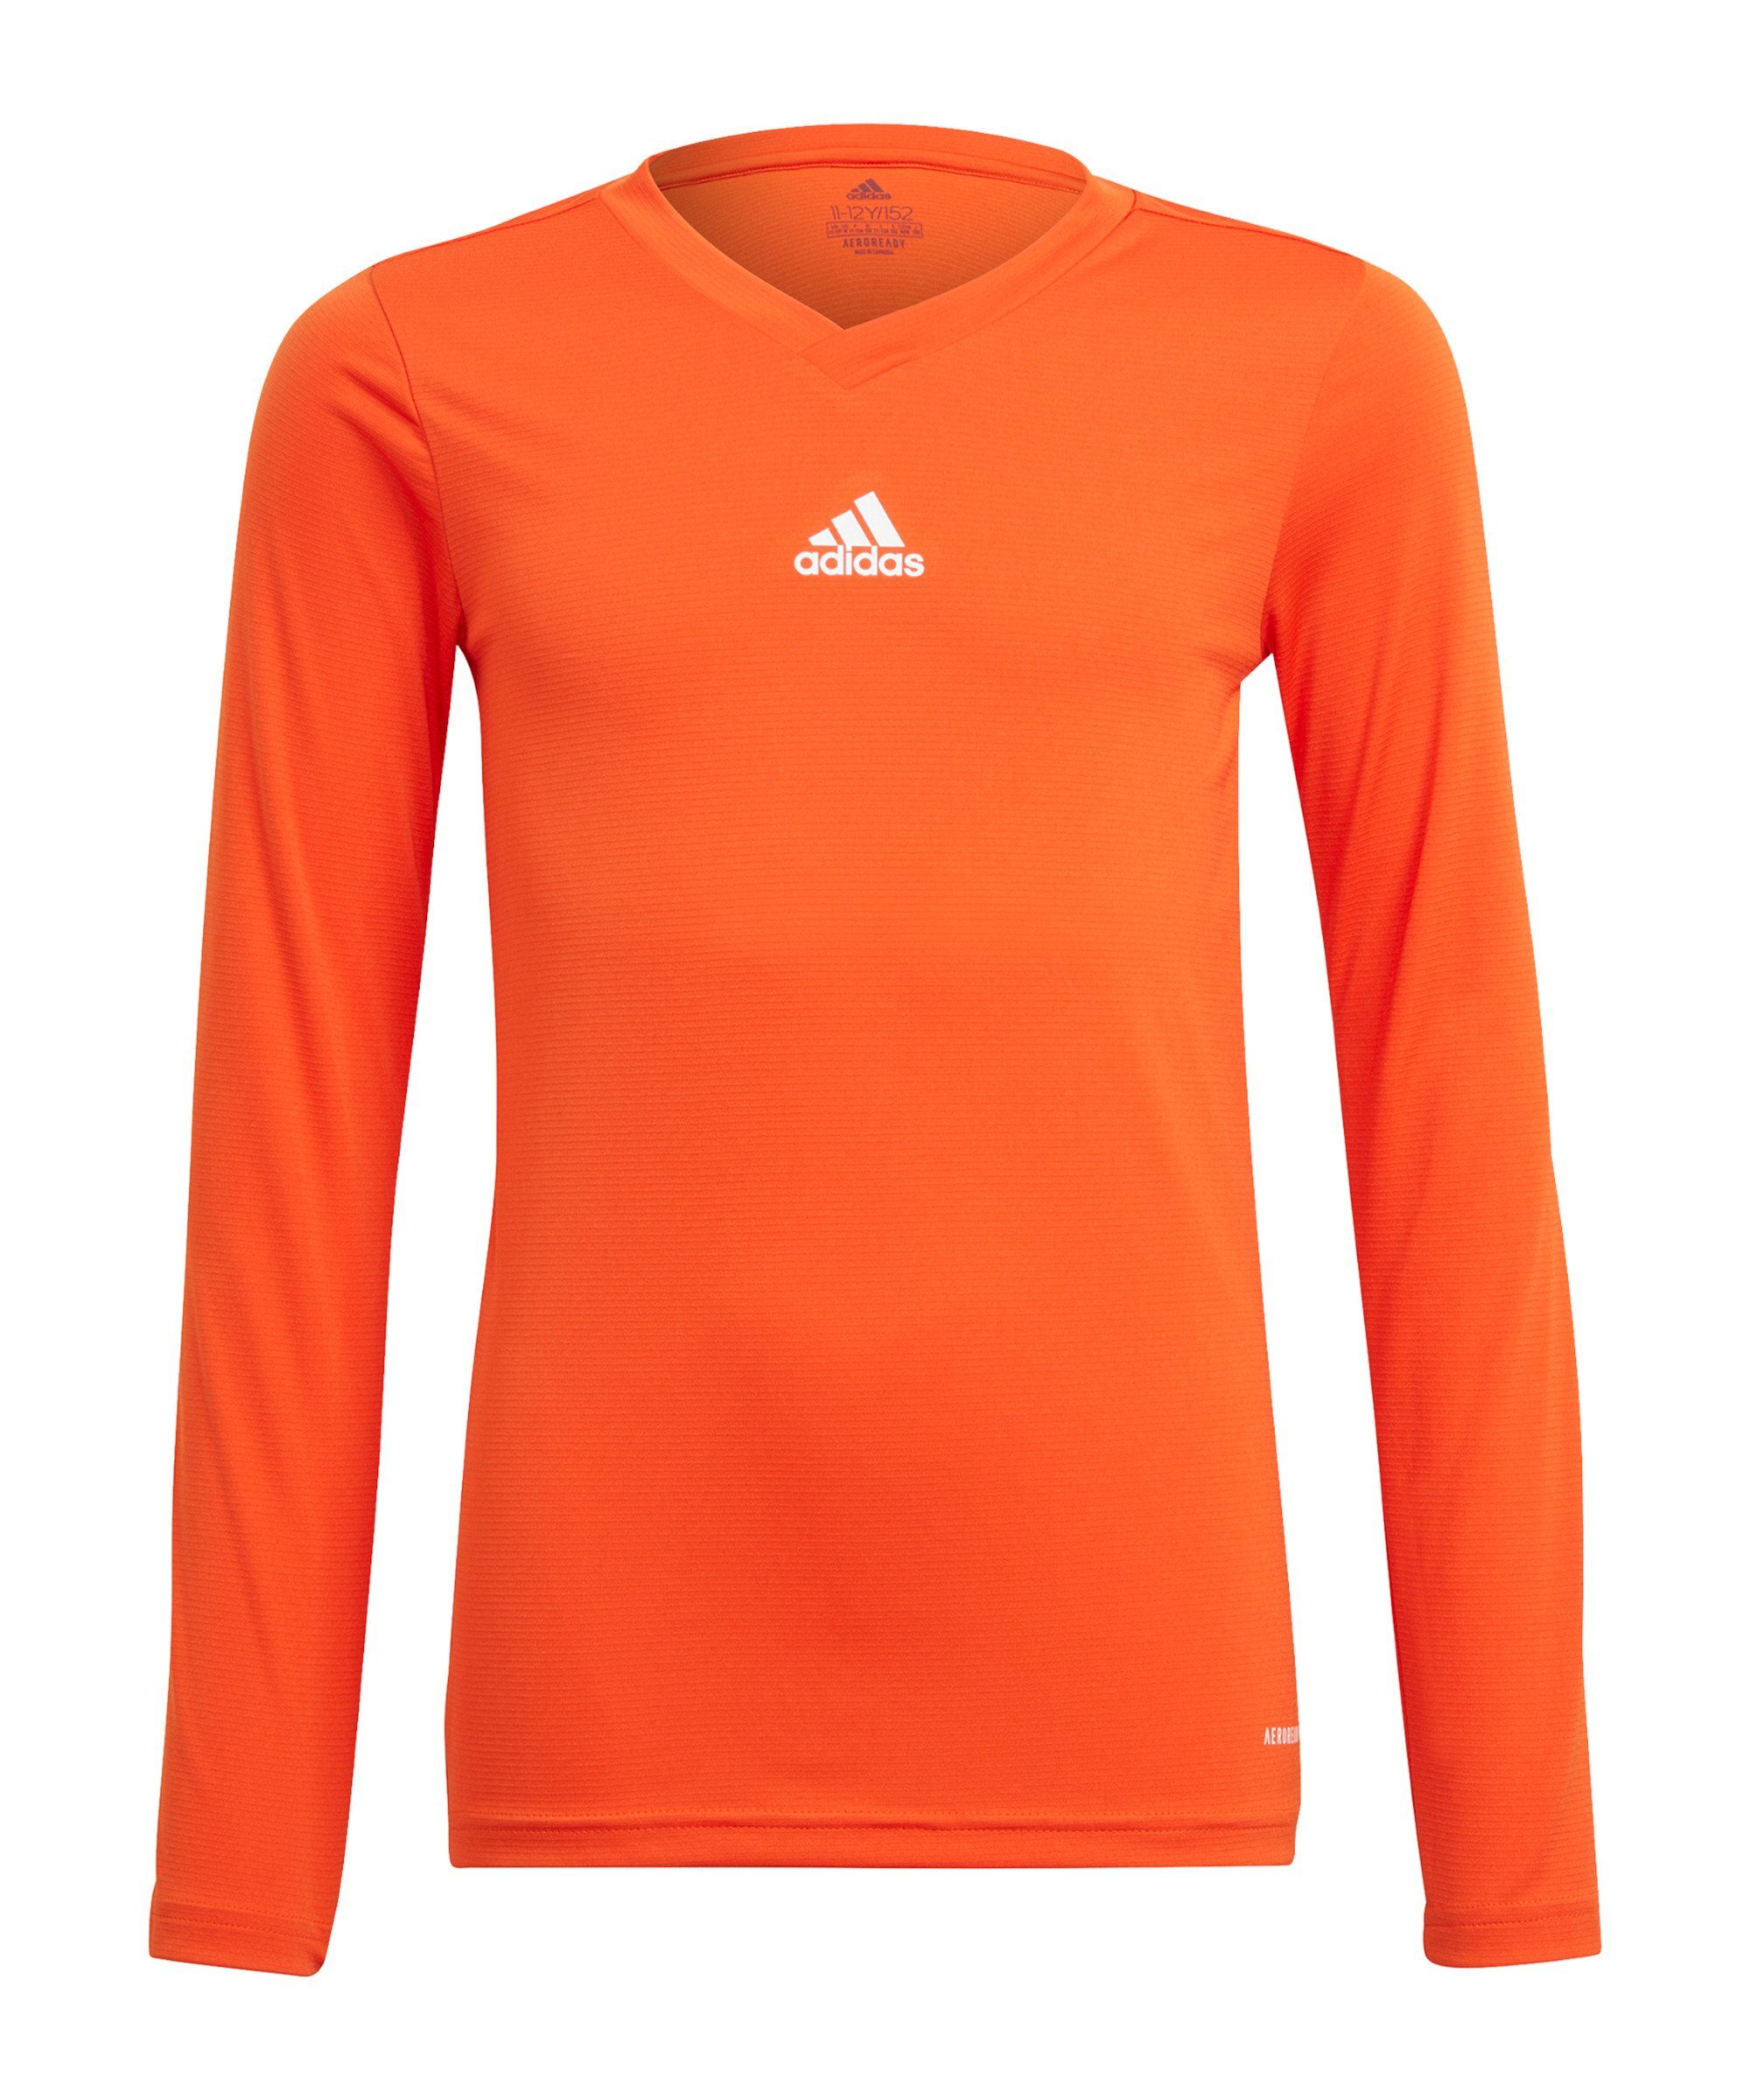 default Top langarm Performance Kids adidas orange Base Funktionsshirt Team Dunkel